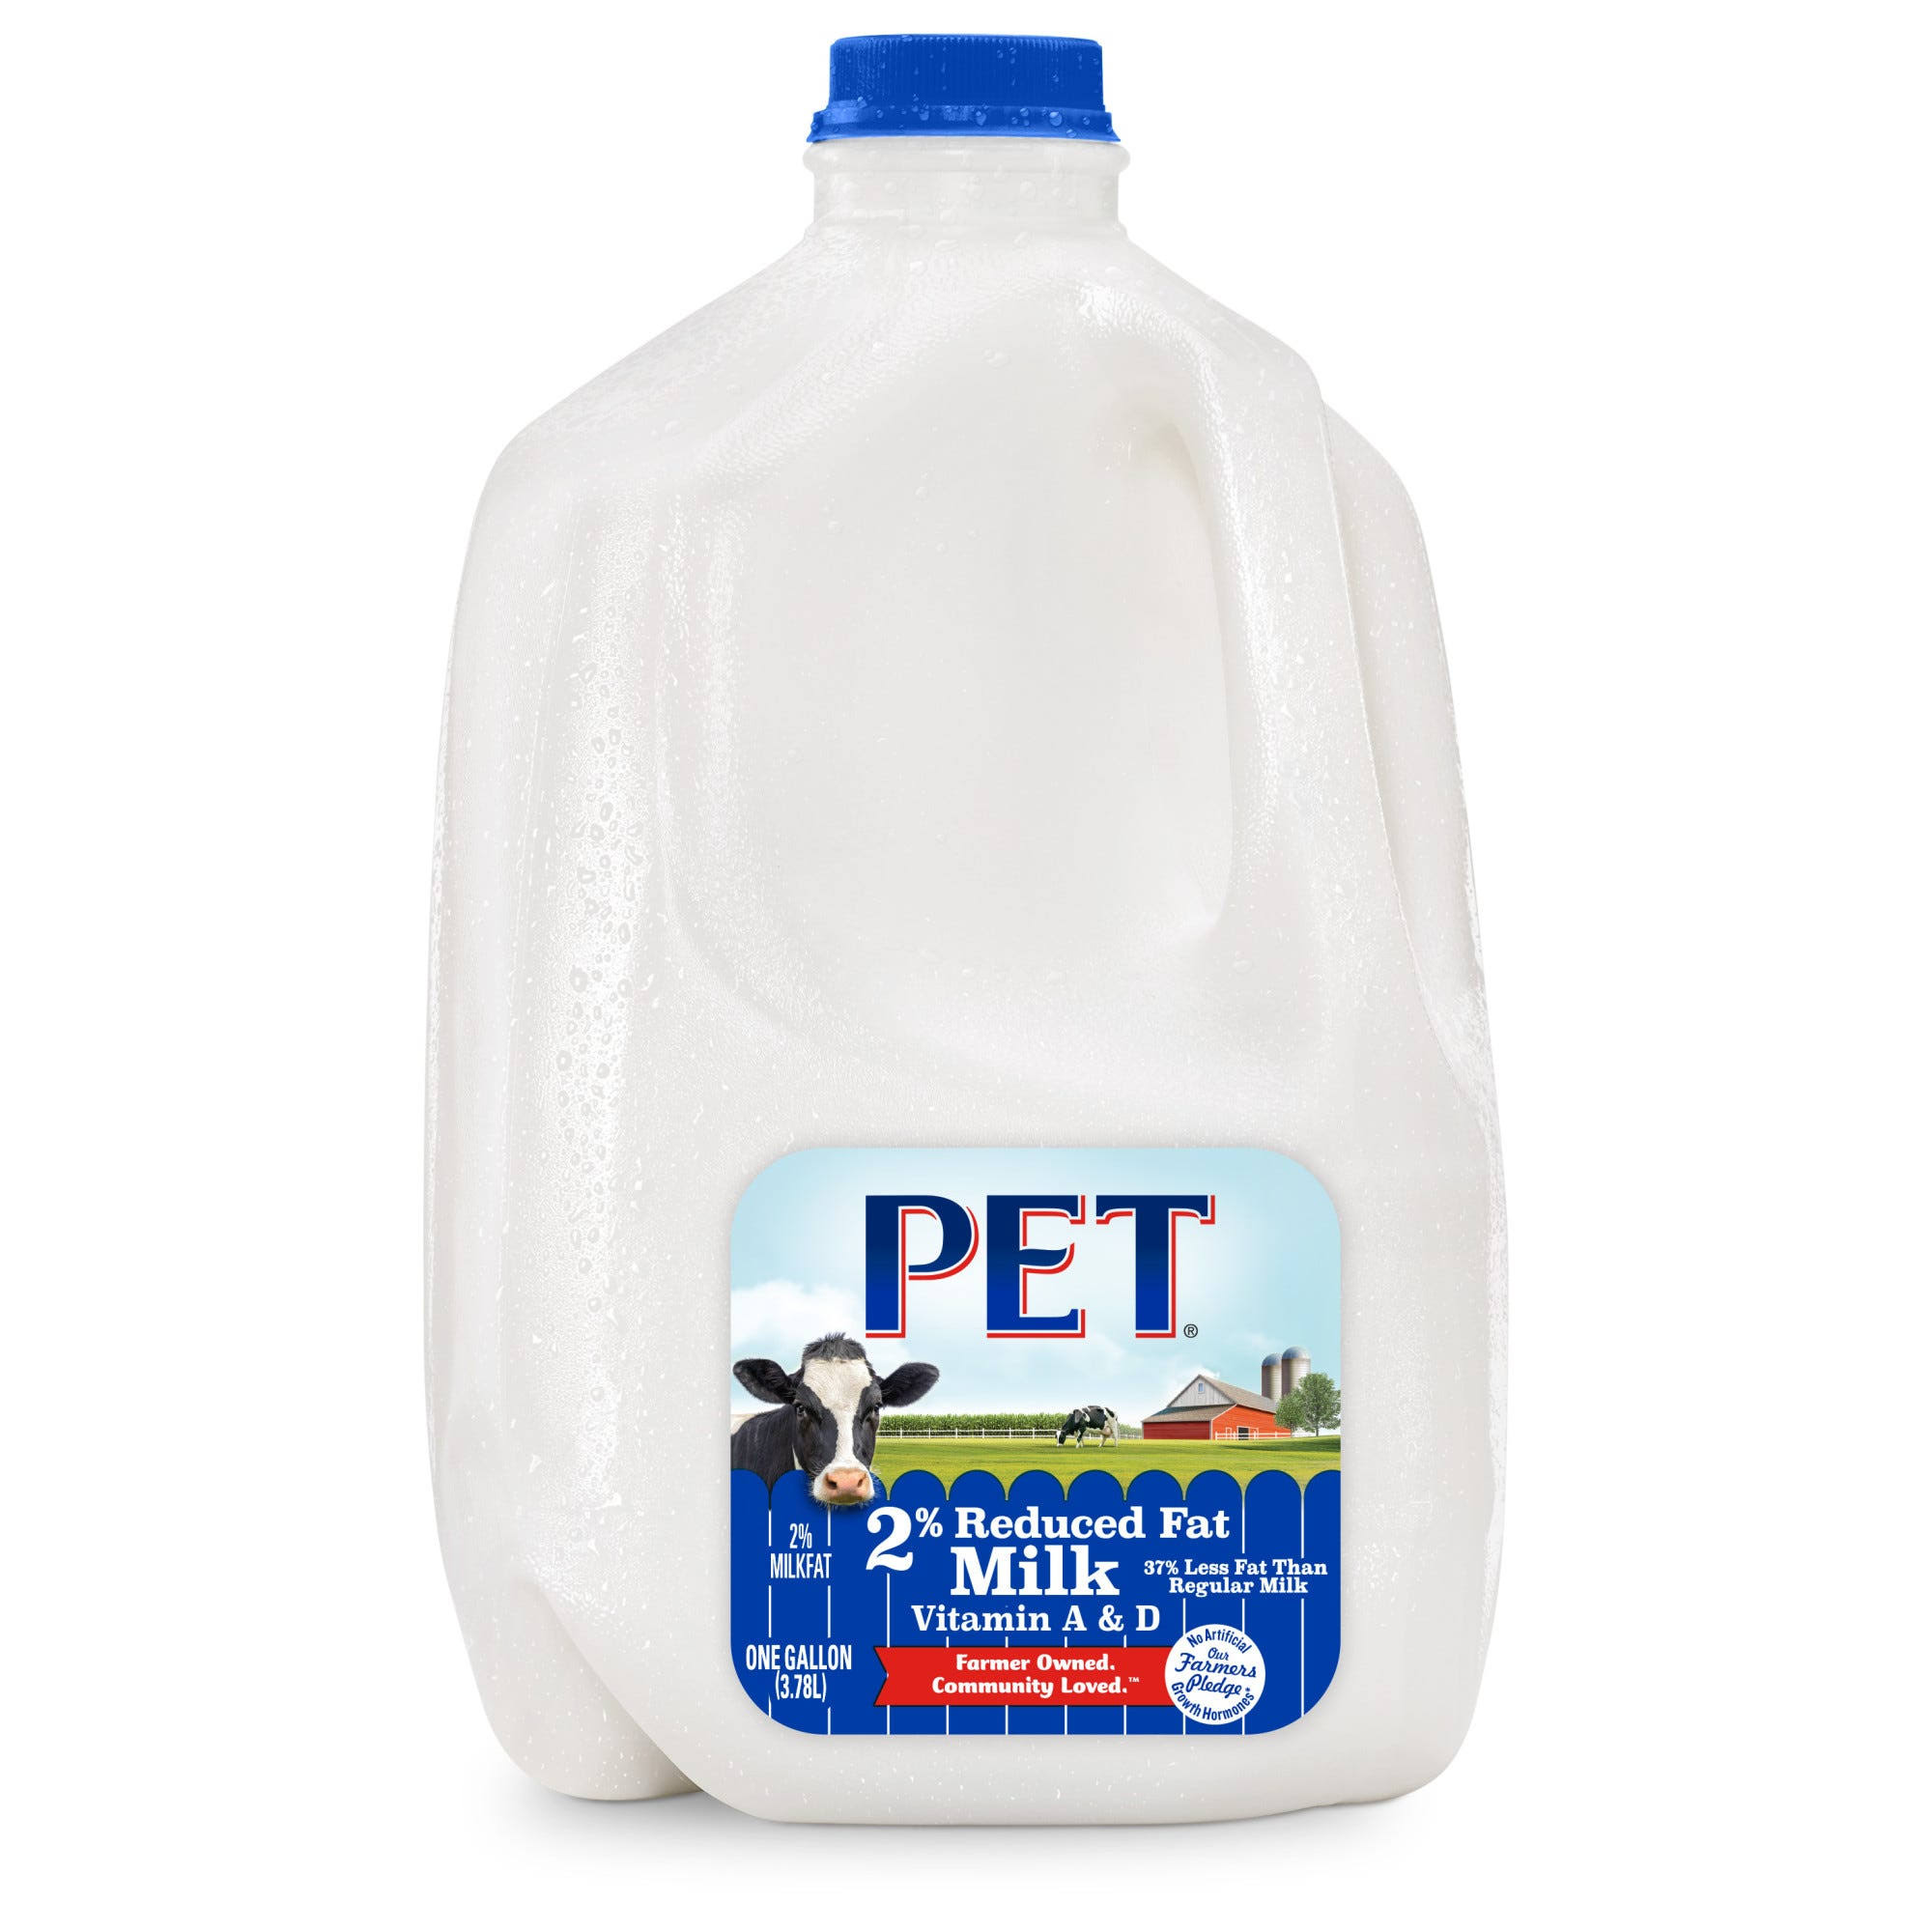 Pet Milk, 2% Reduced Fat - one gallon (3.78 l)